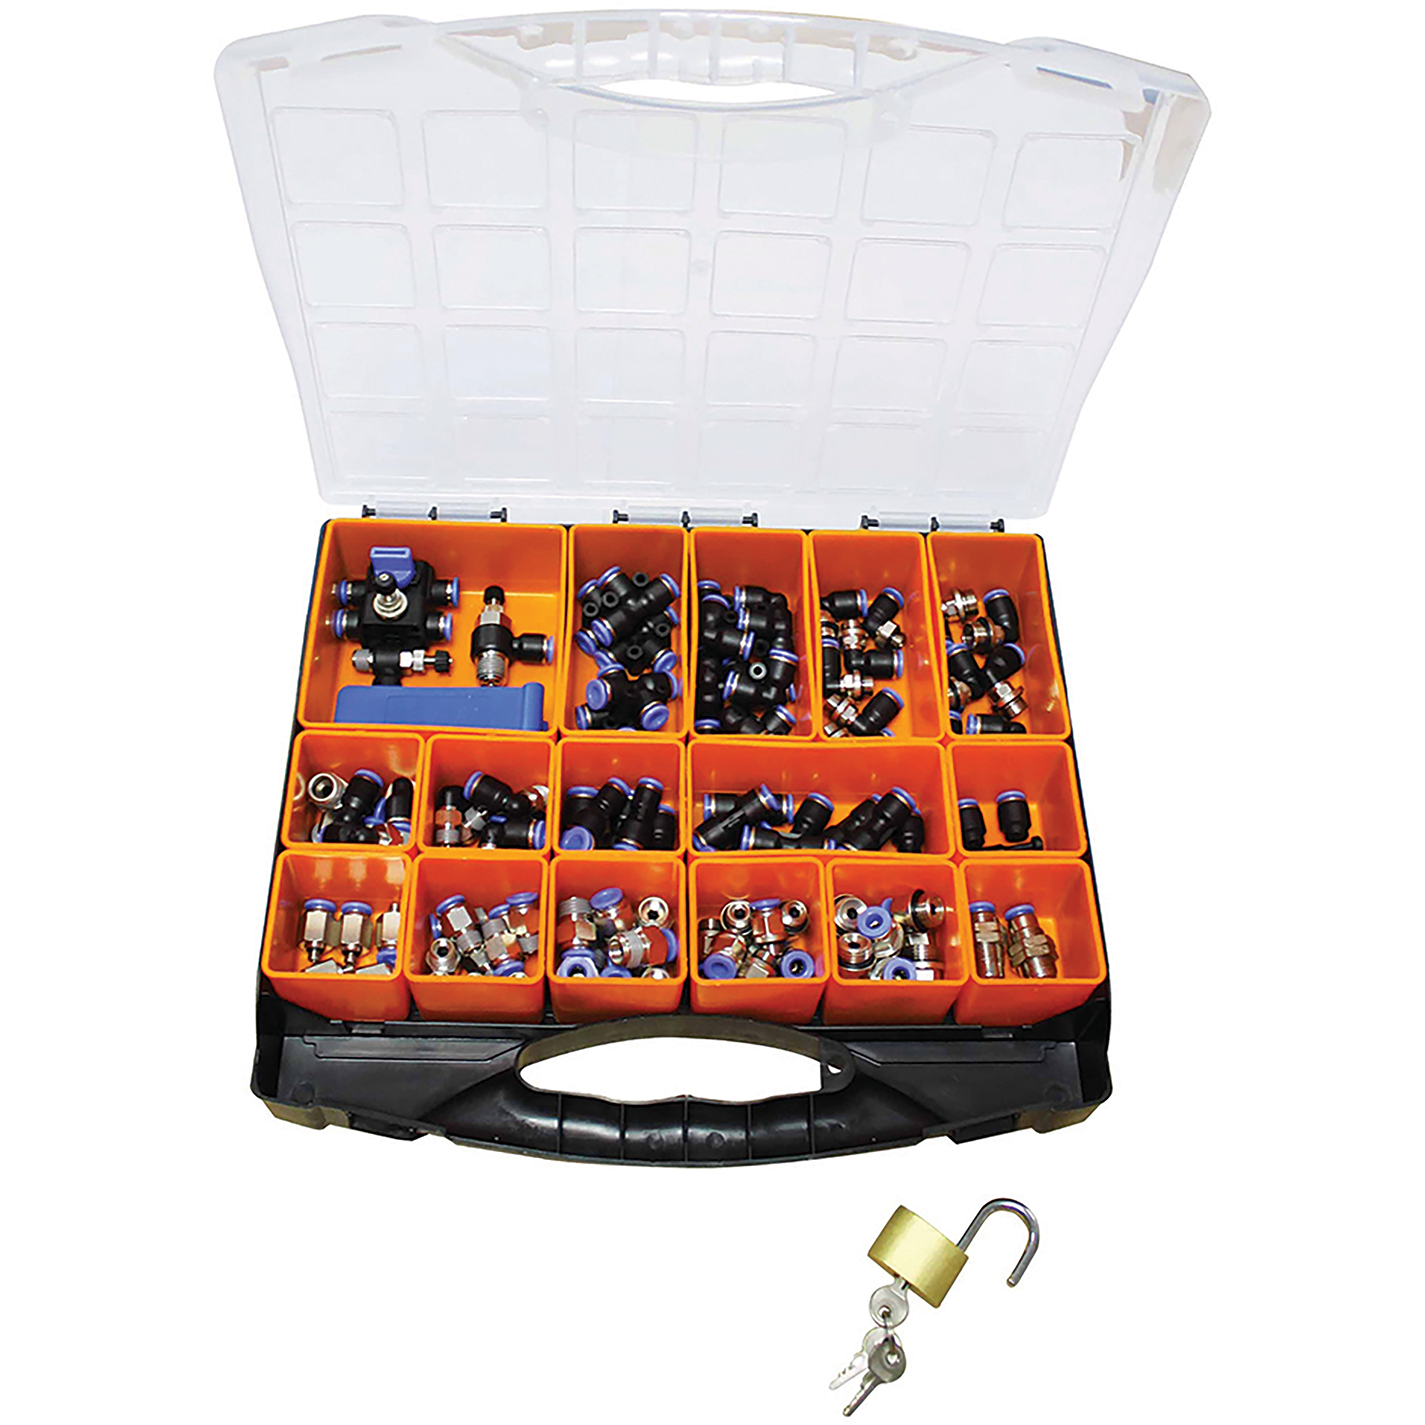 4mm OD Emergency Push Fitting Kit